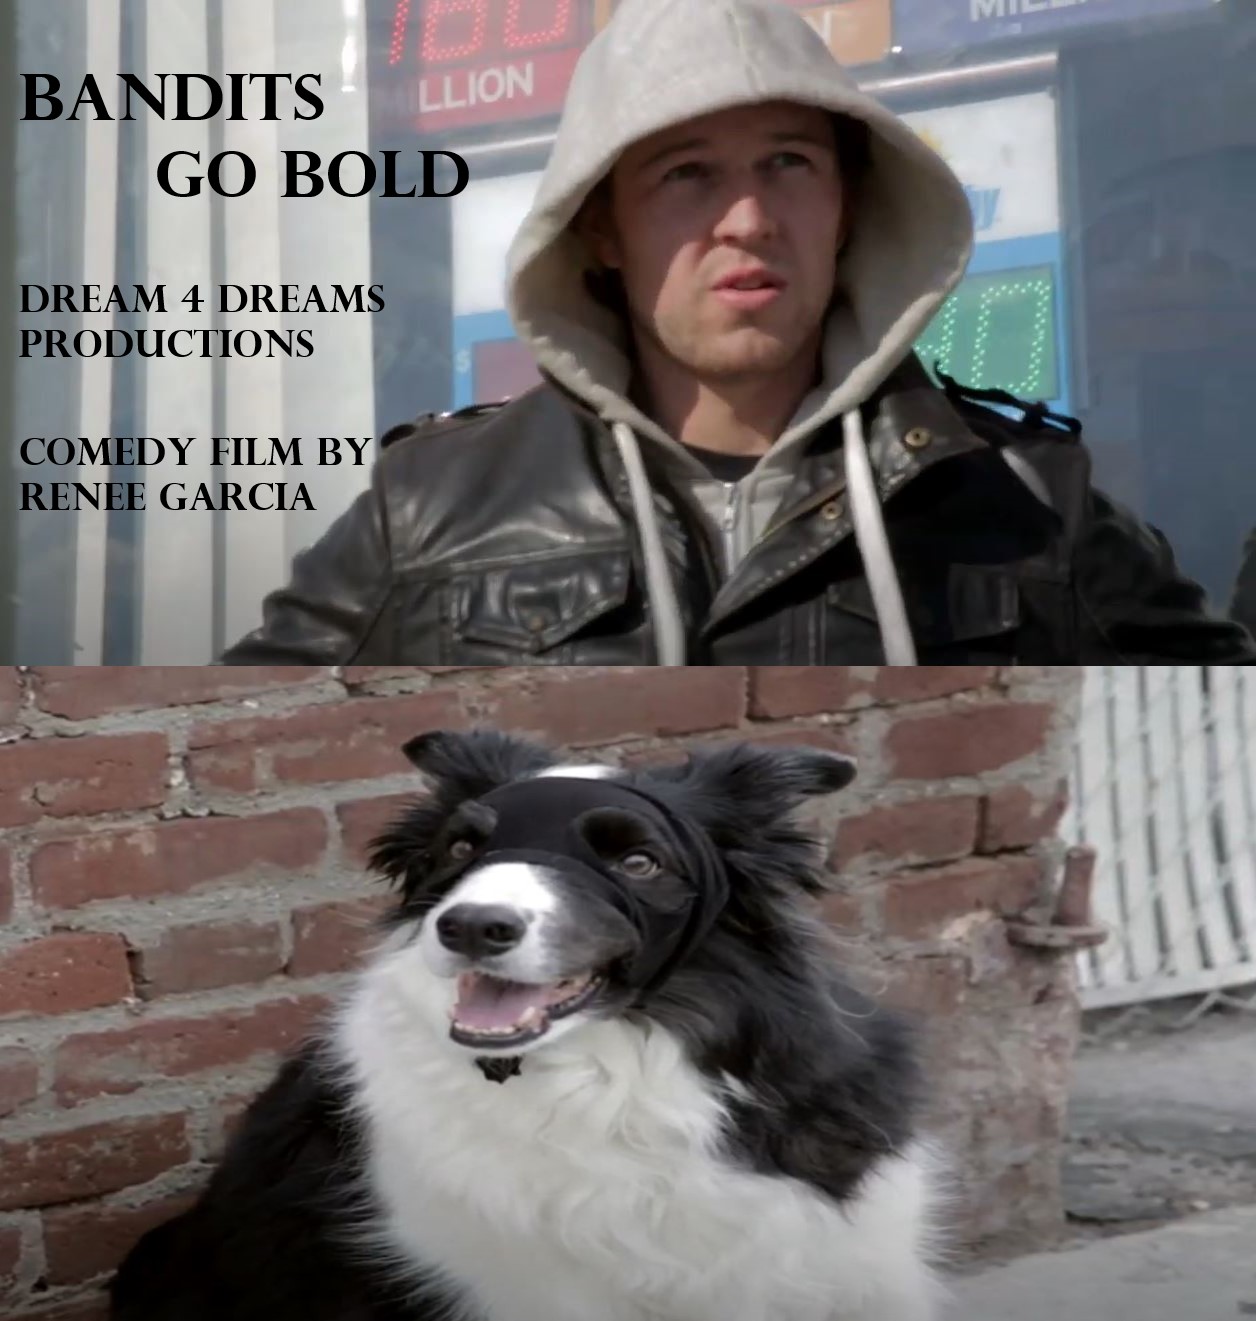 Bandits Go Bold